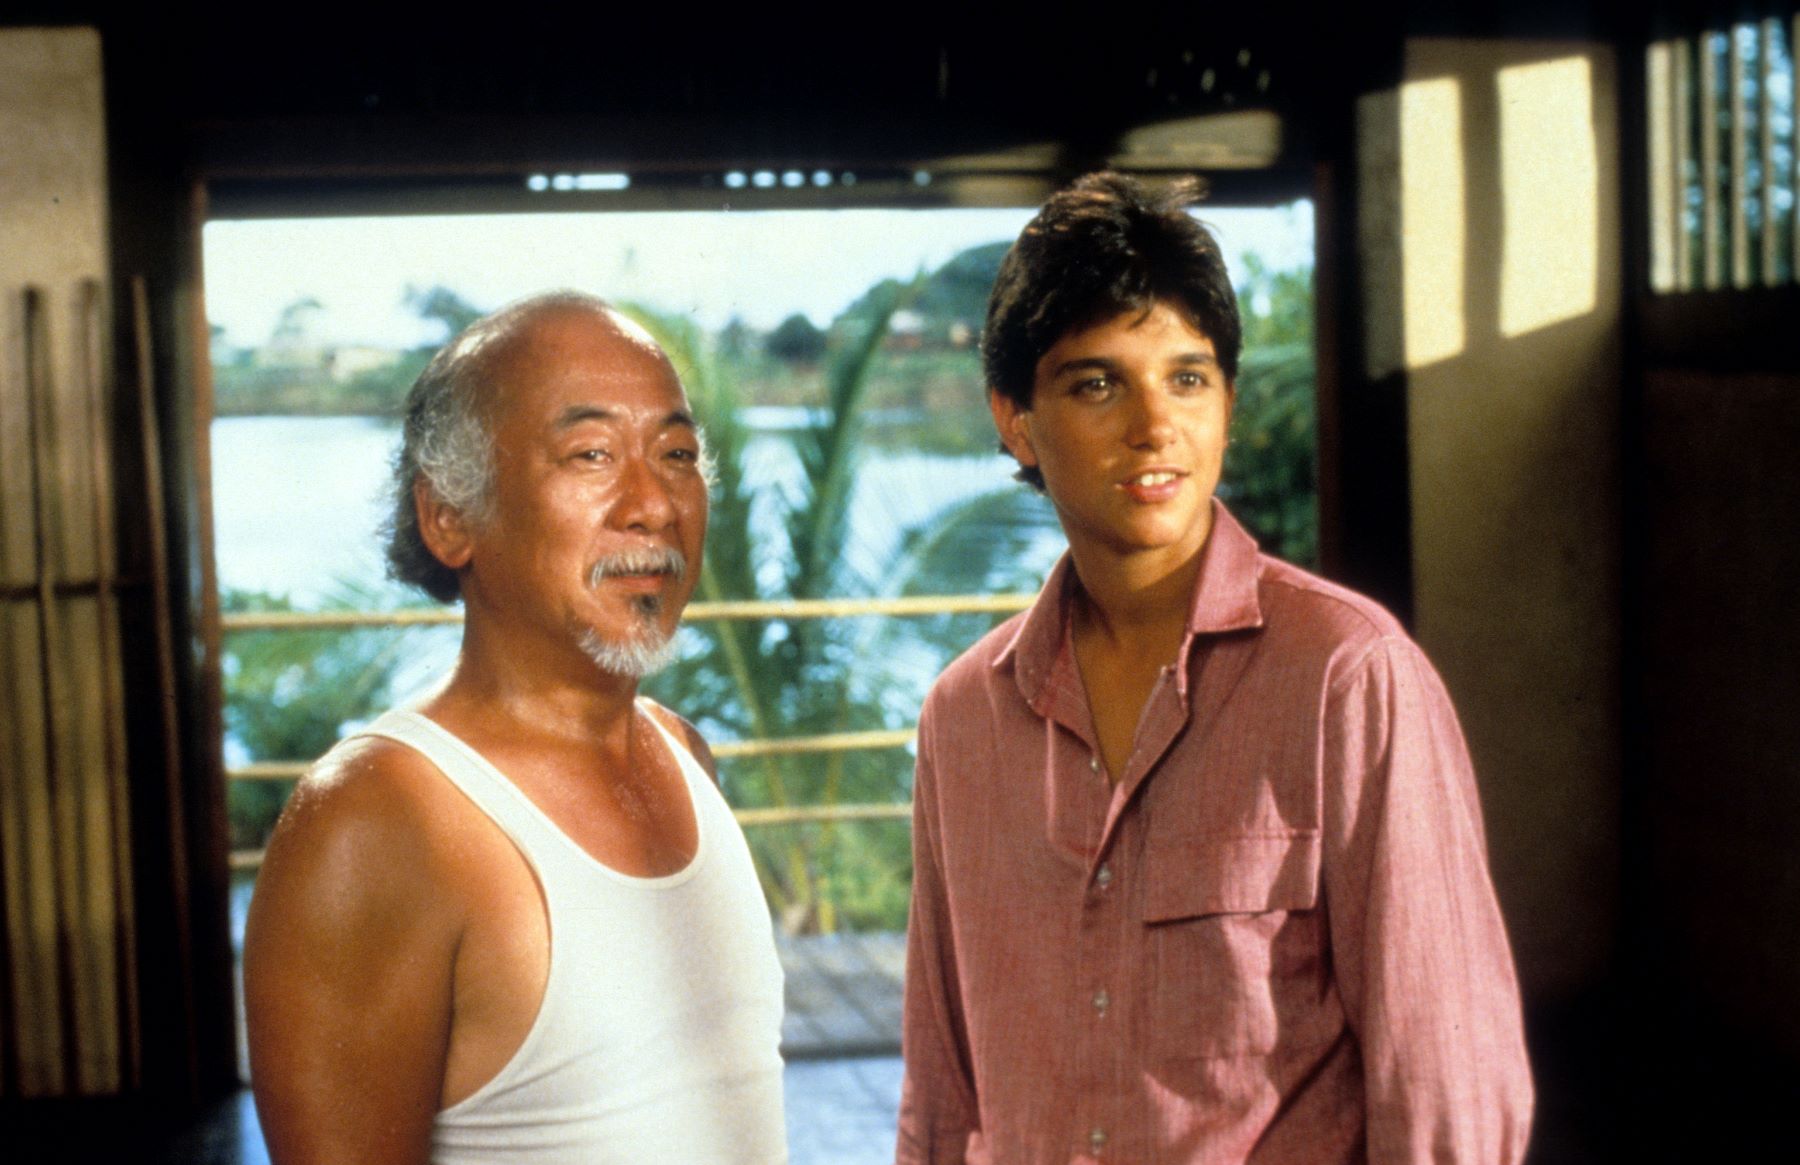 Ralph Macchio, Karate Kid star, resumes role in 's 'Cobra Kai